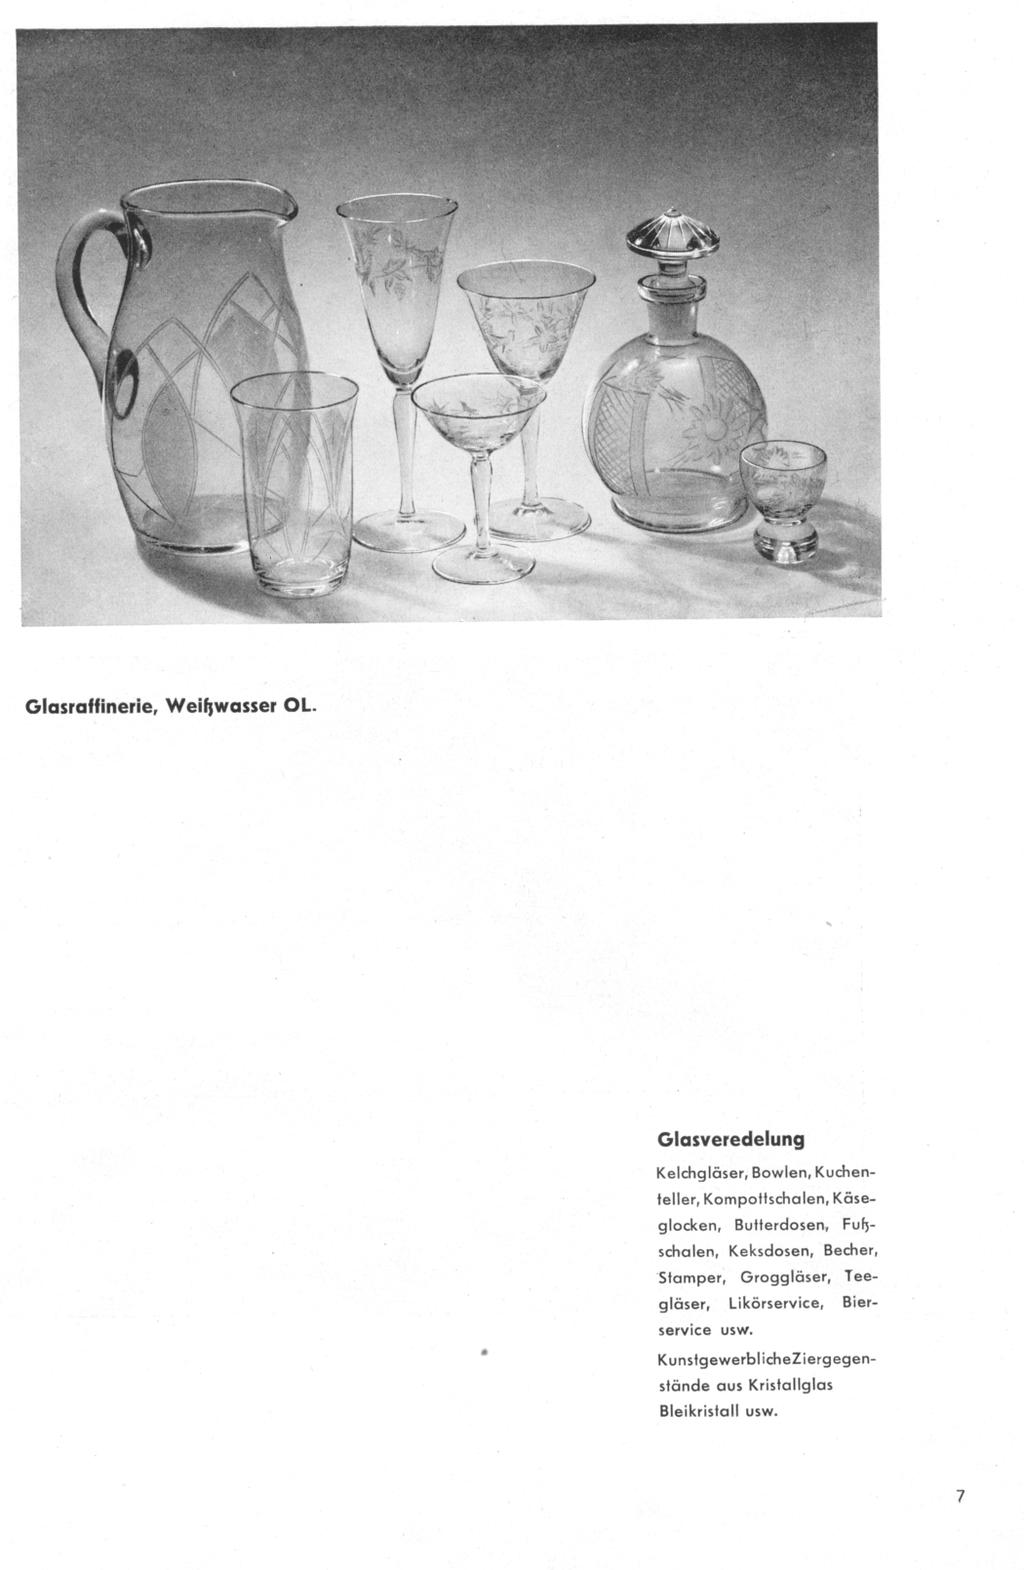 Abb. 2008-3-07/006 MB VVB Kamenz 1949, Seite 7, Glasraffinerie,